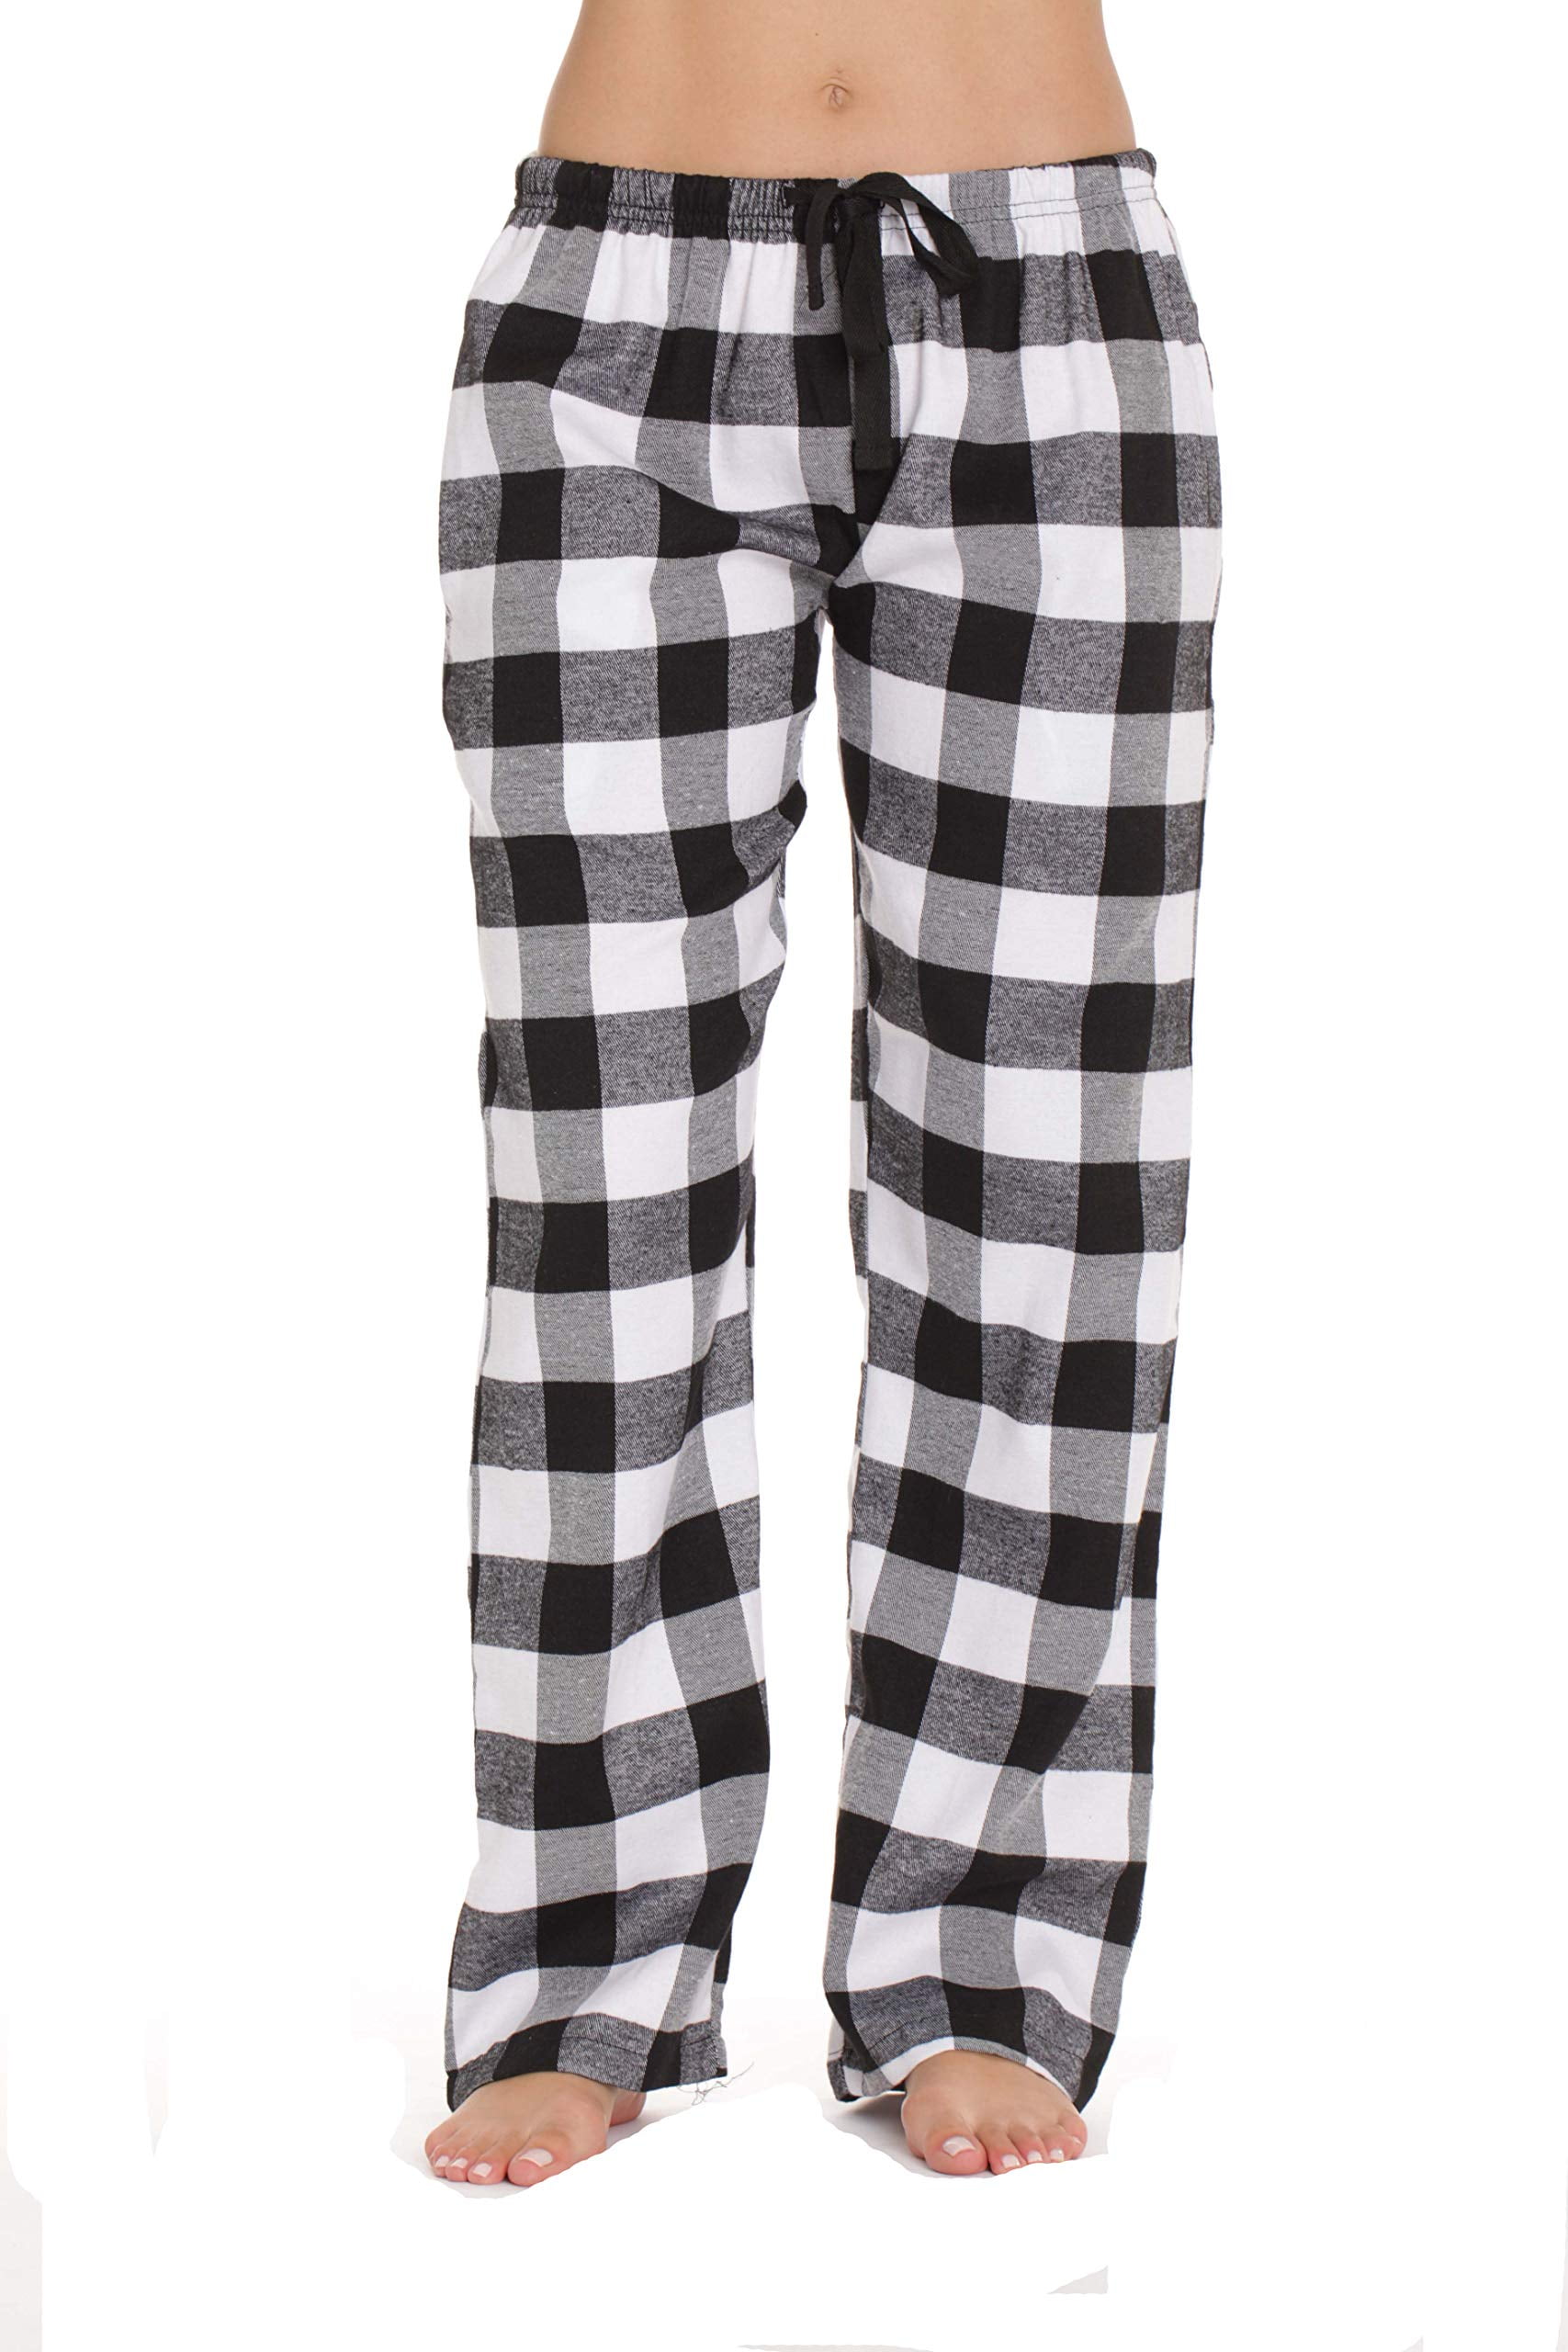 #followme Buffalo Plaid Flannel Pajama Pants for Women with Pockets (White  - Buffalo Plaid, Large)